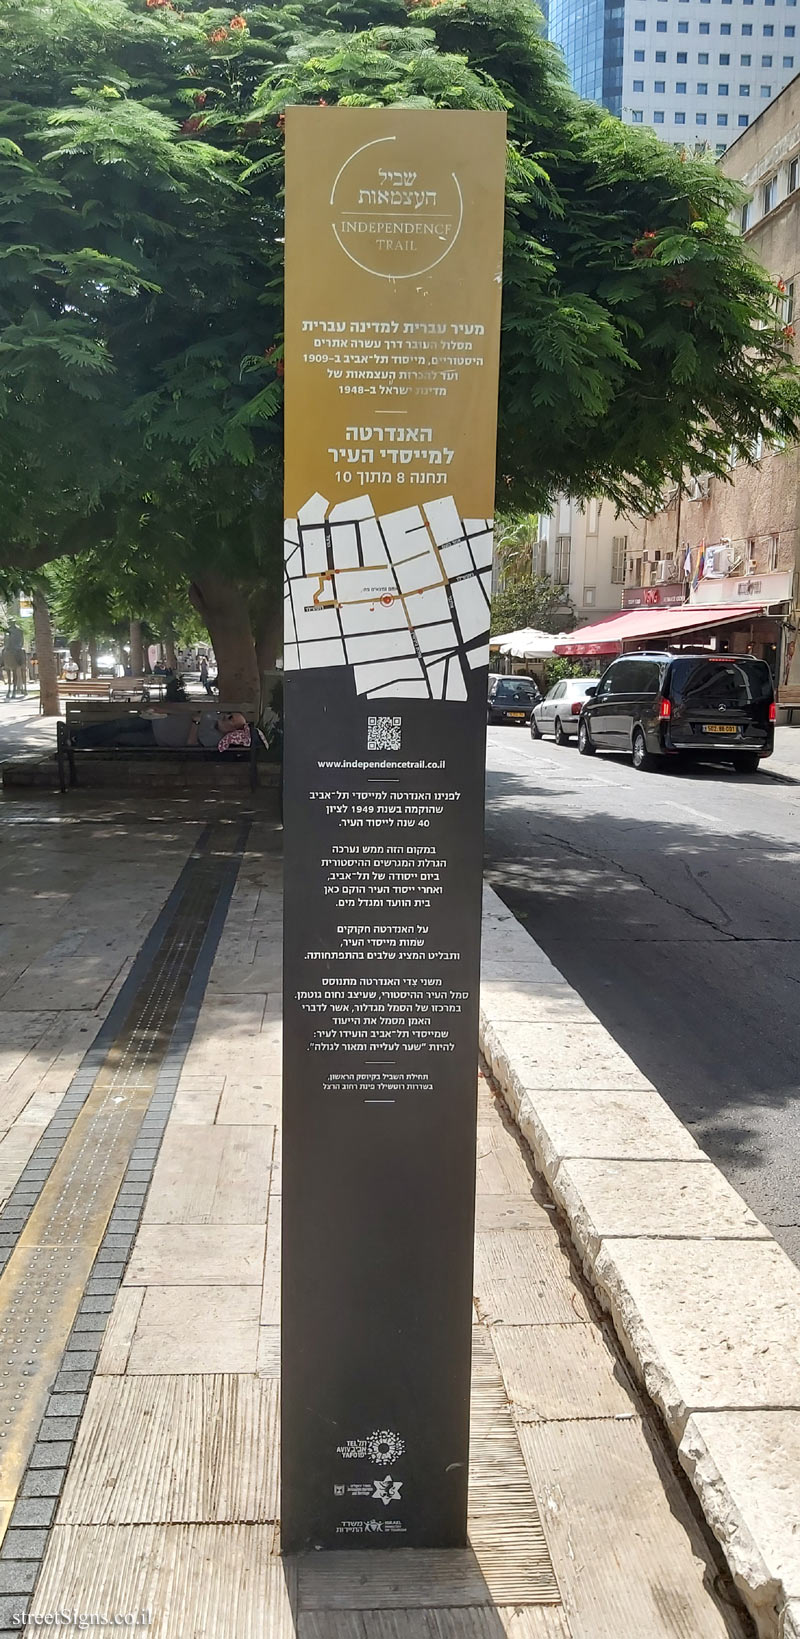 Tel Aviv - Independence Trail - Tel Aviv Founders Monument - Information